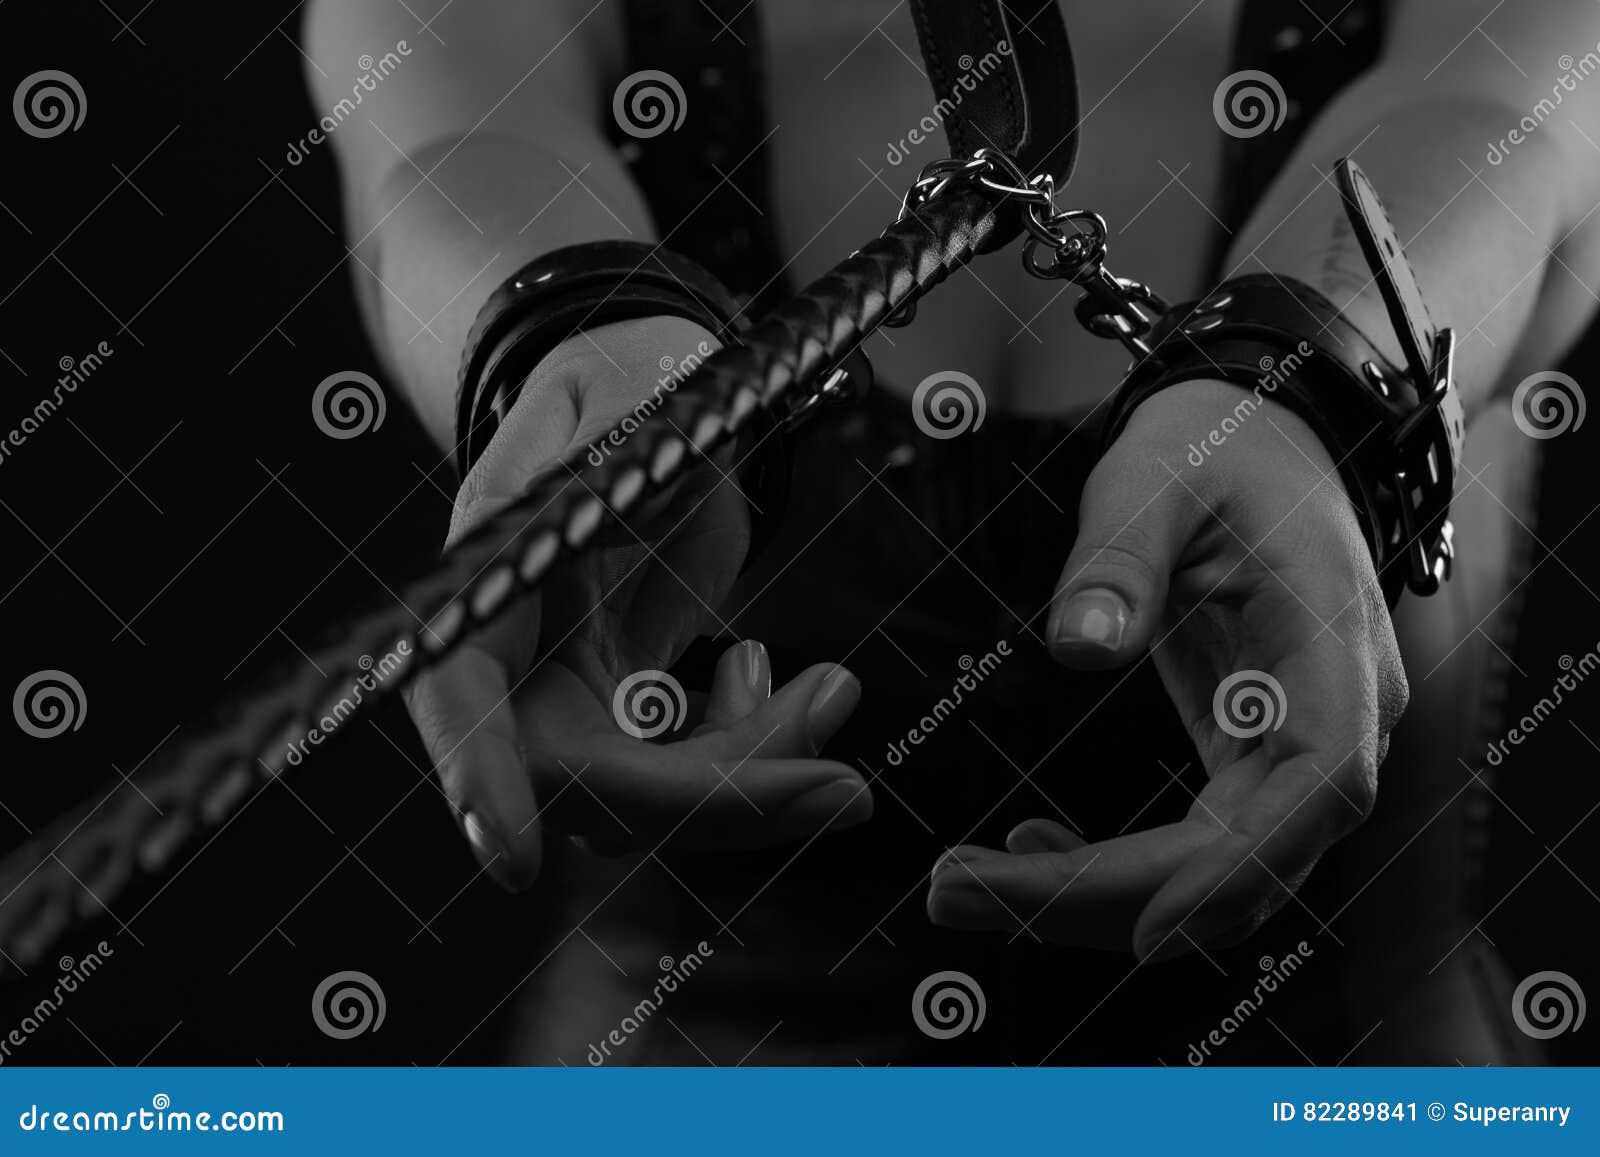 порно наручники на мужчинах фото 48